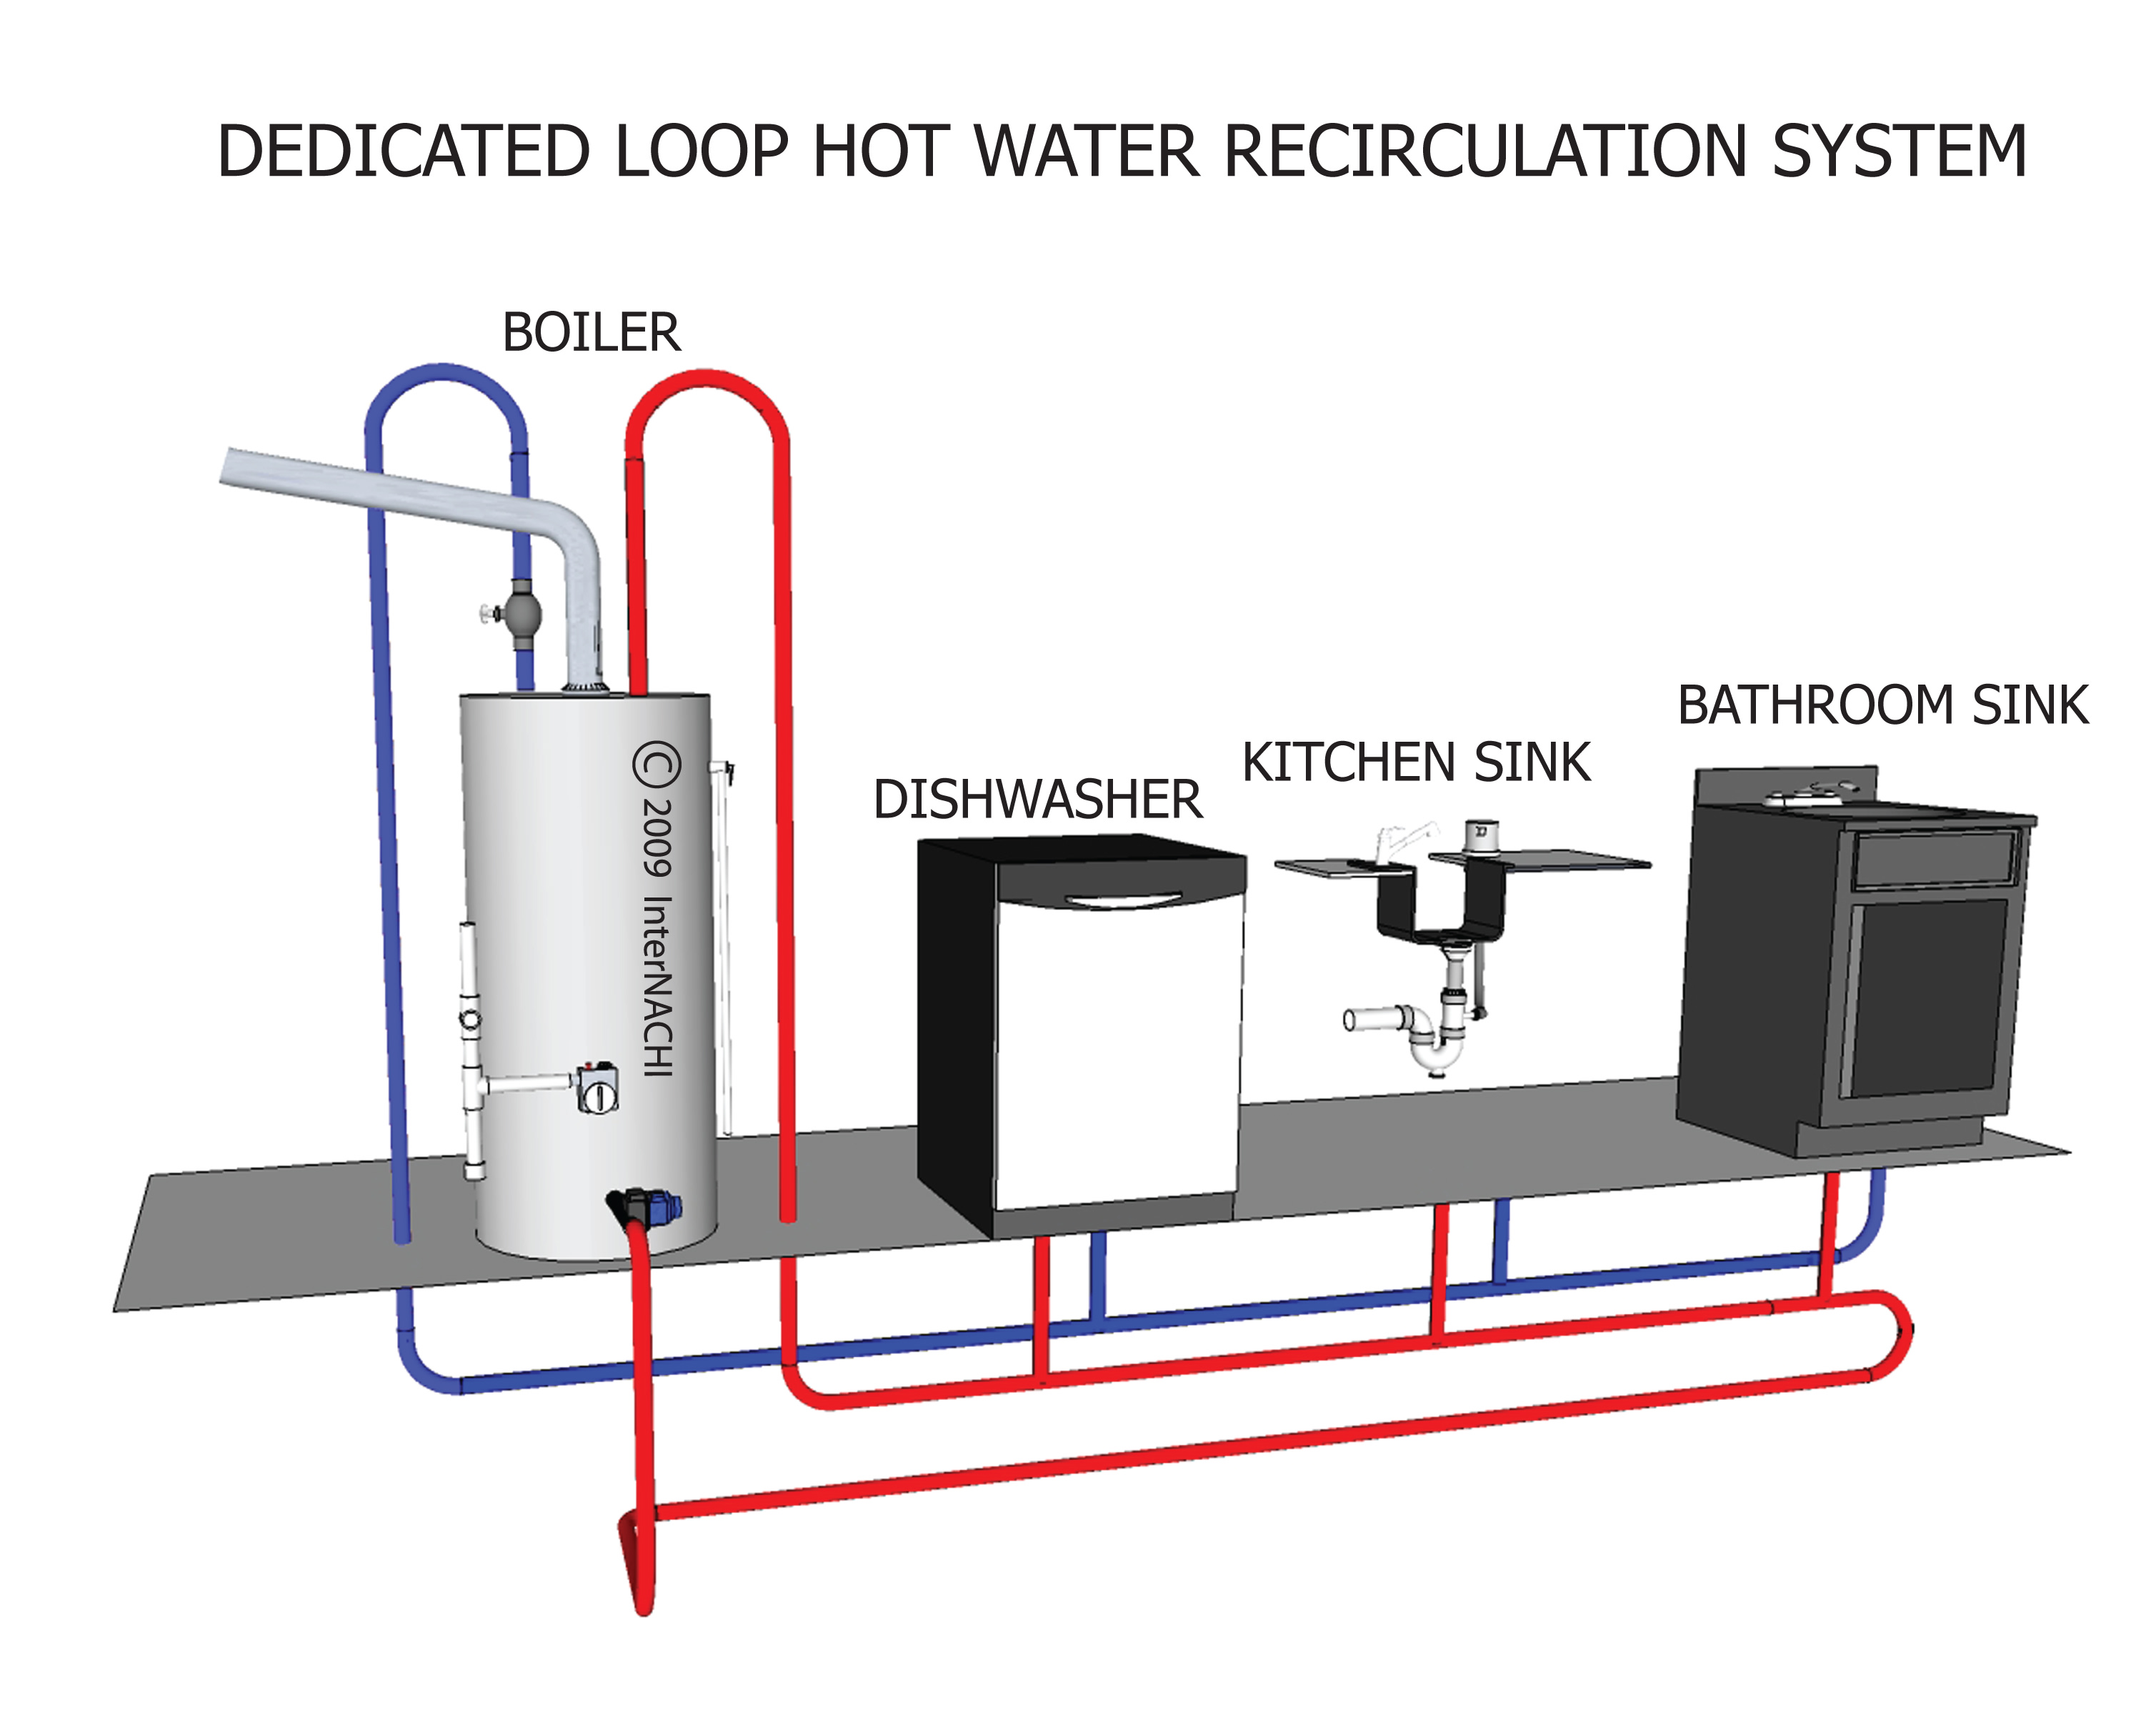 Dedicated loop, hot water recirculation system.